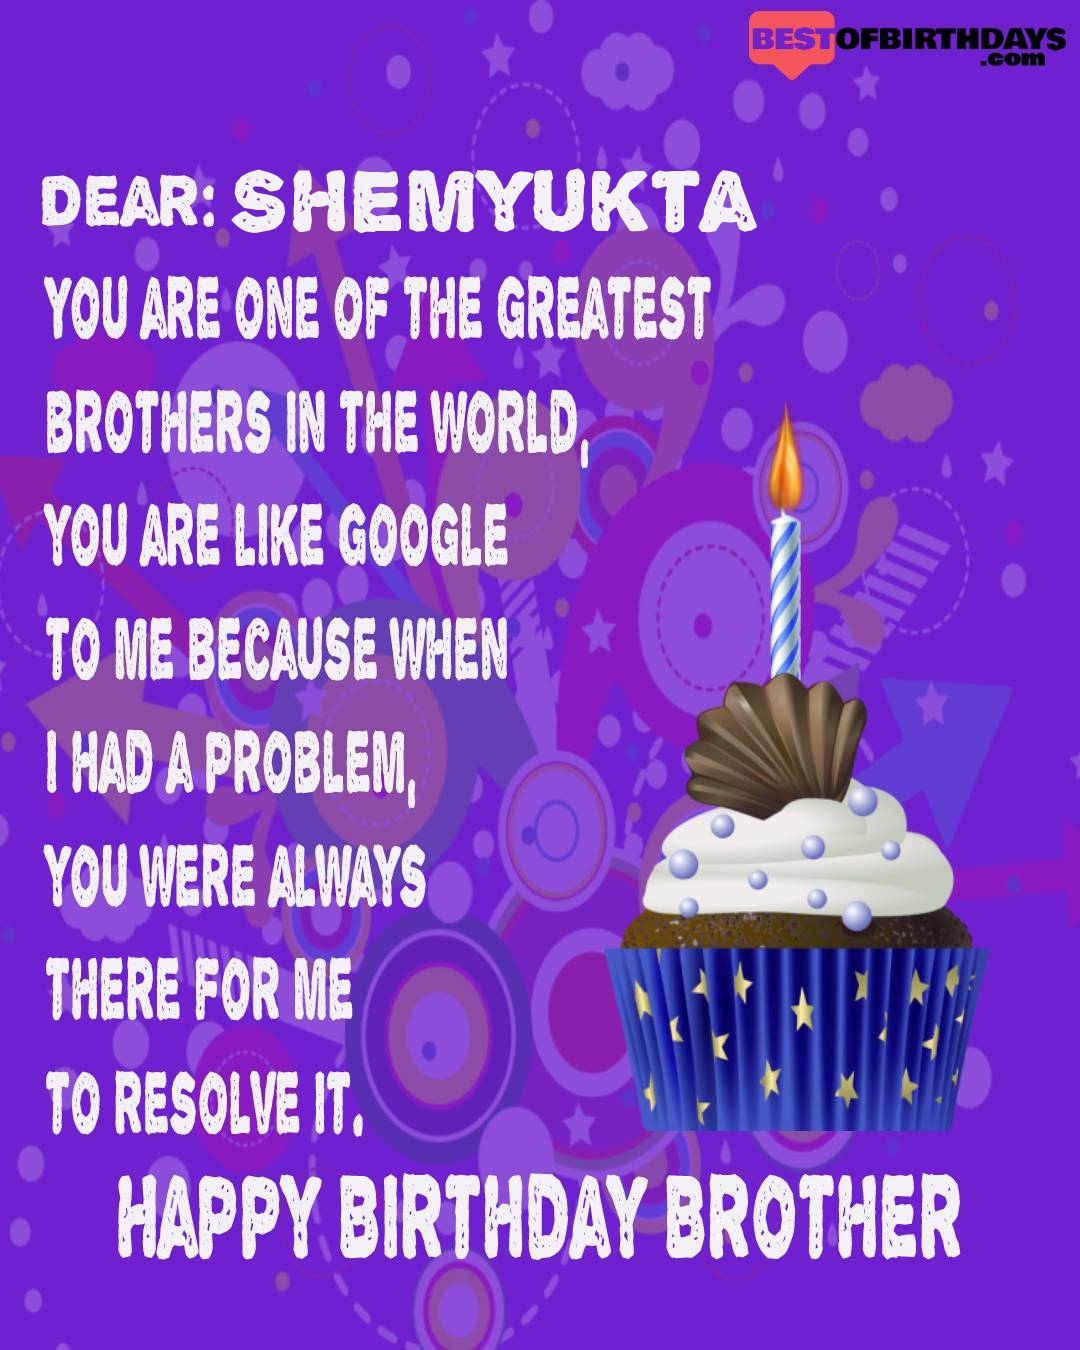 Happy birthday shemyukta bhai brother bro